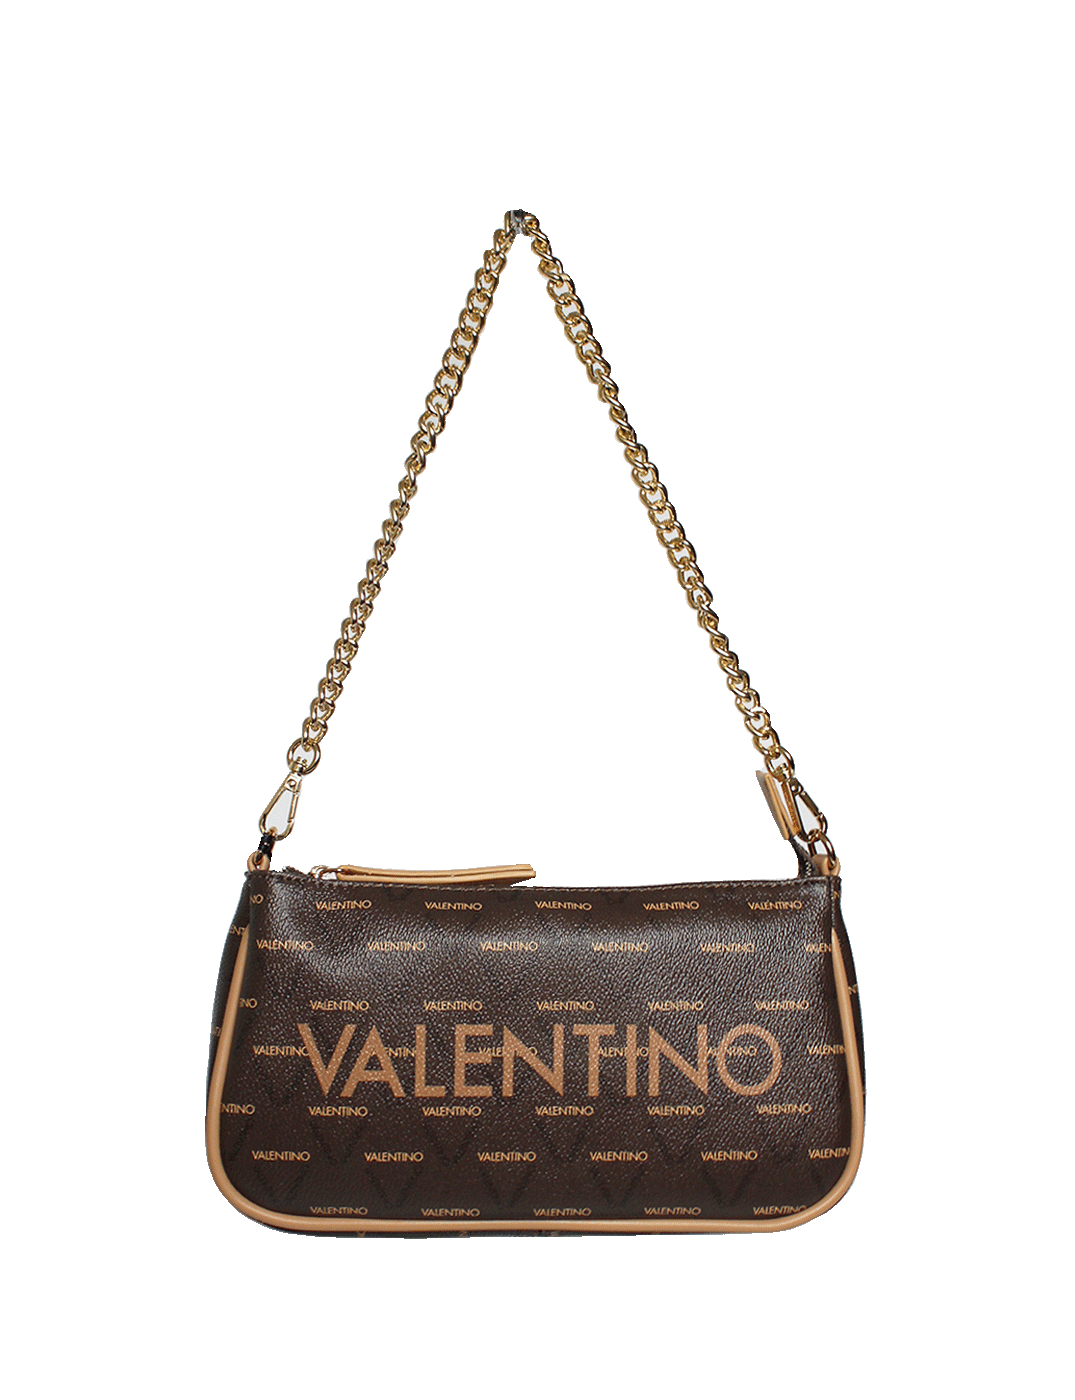 Valentino bags, Liuto shoulder bag in brown